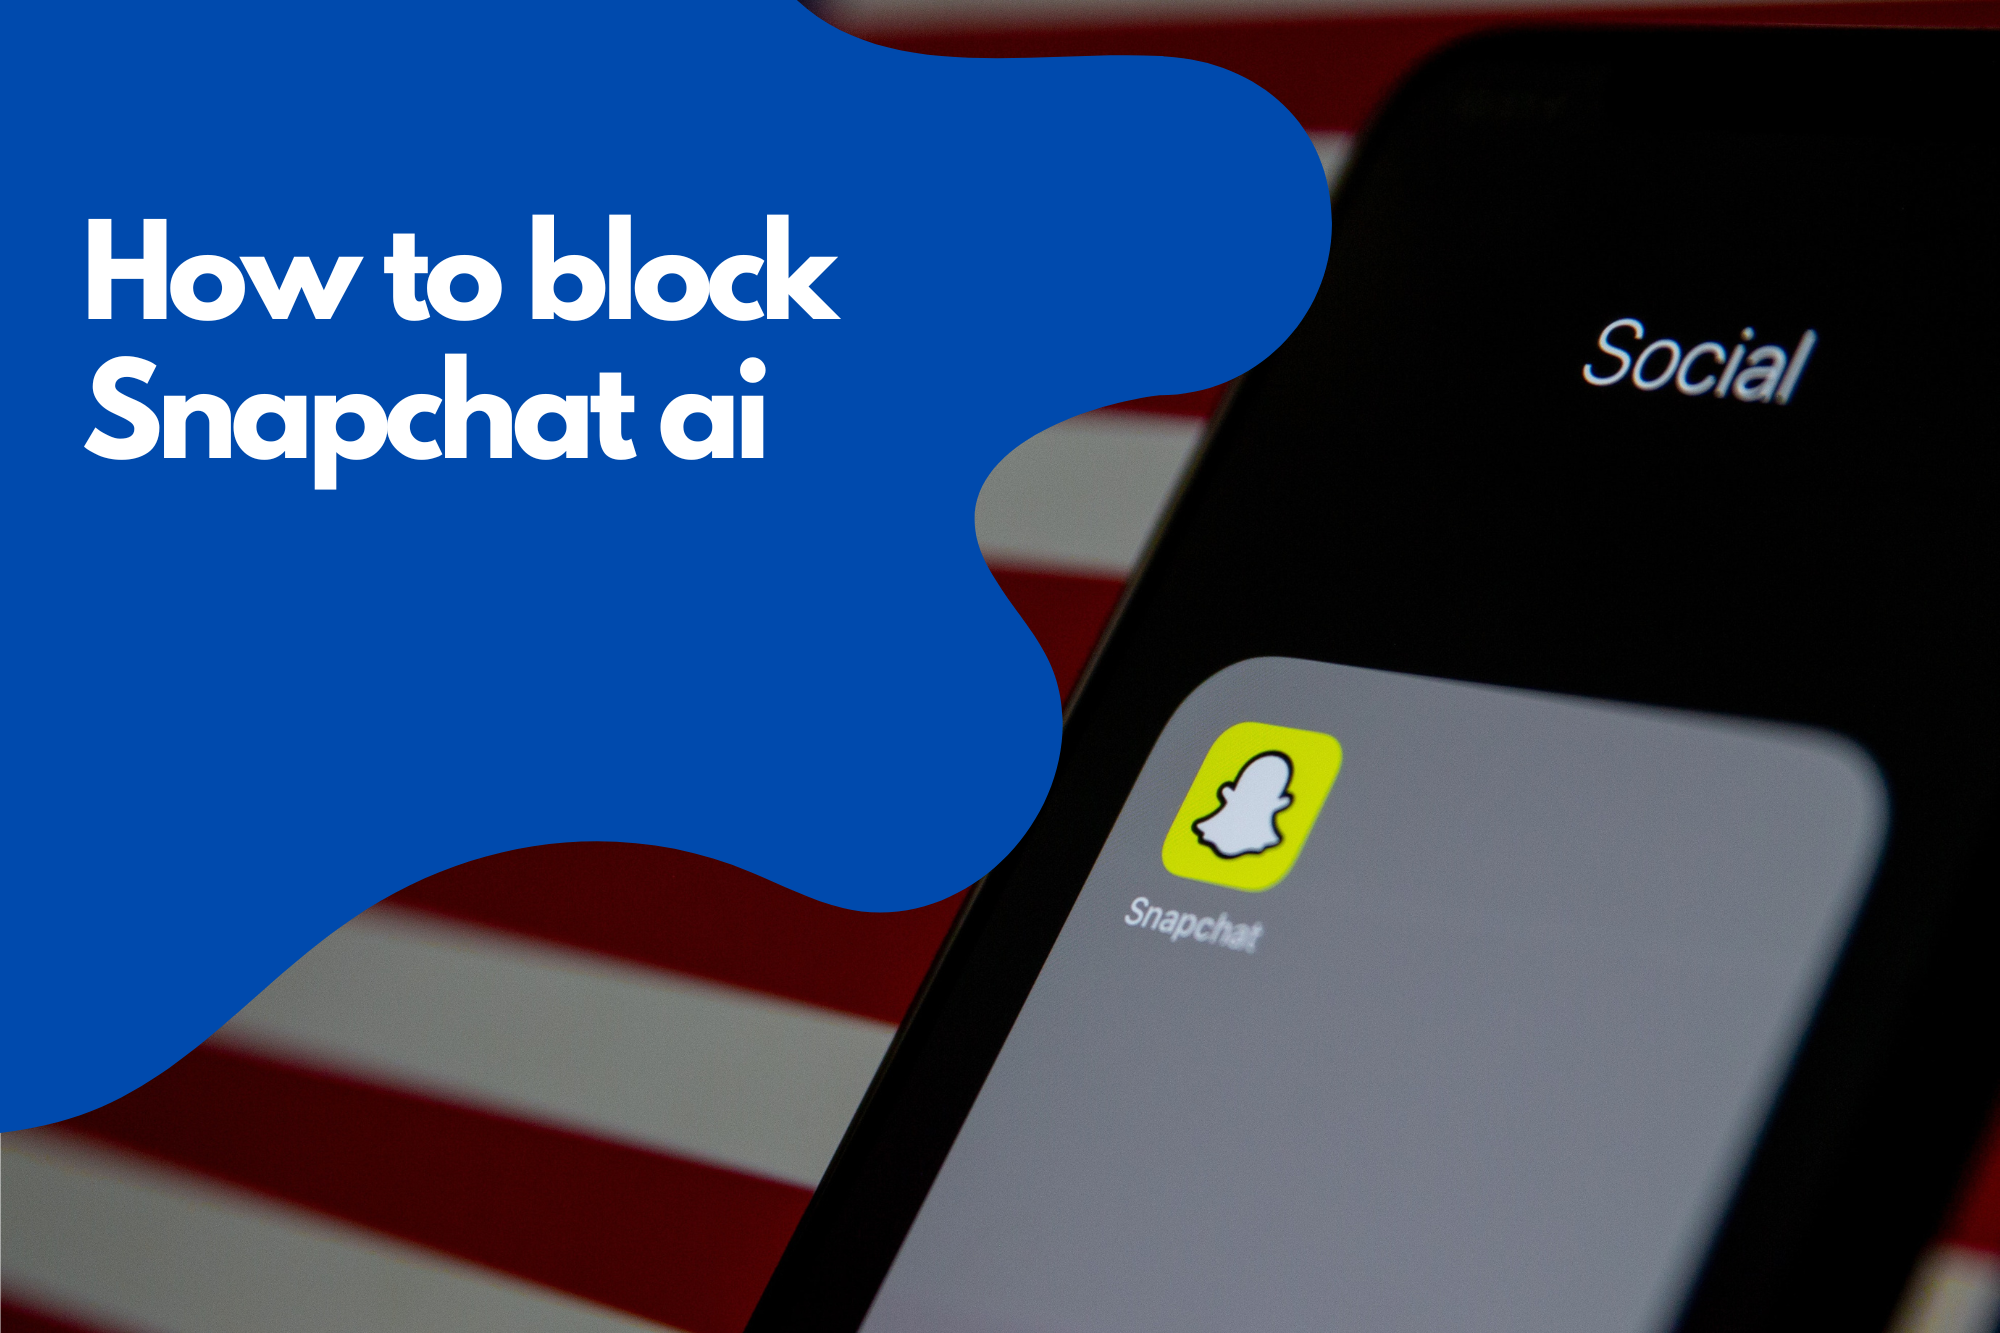 How to block Snapchat ai